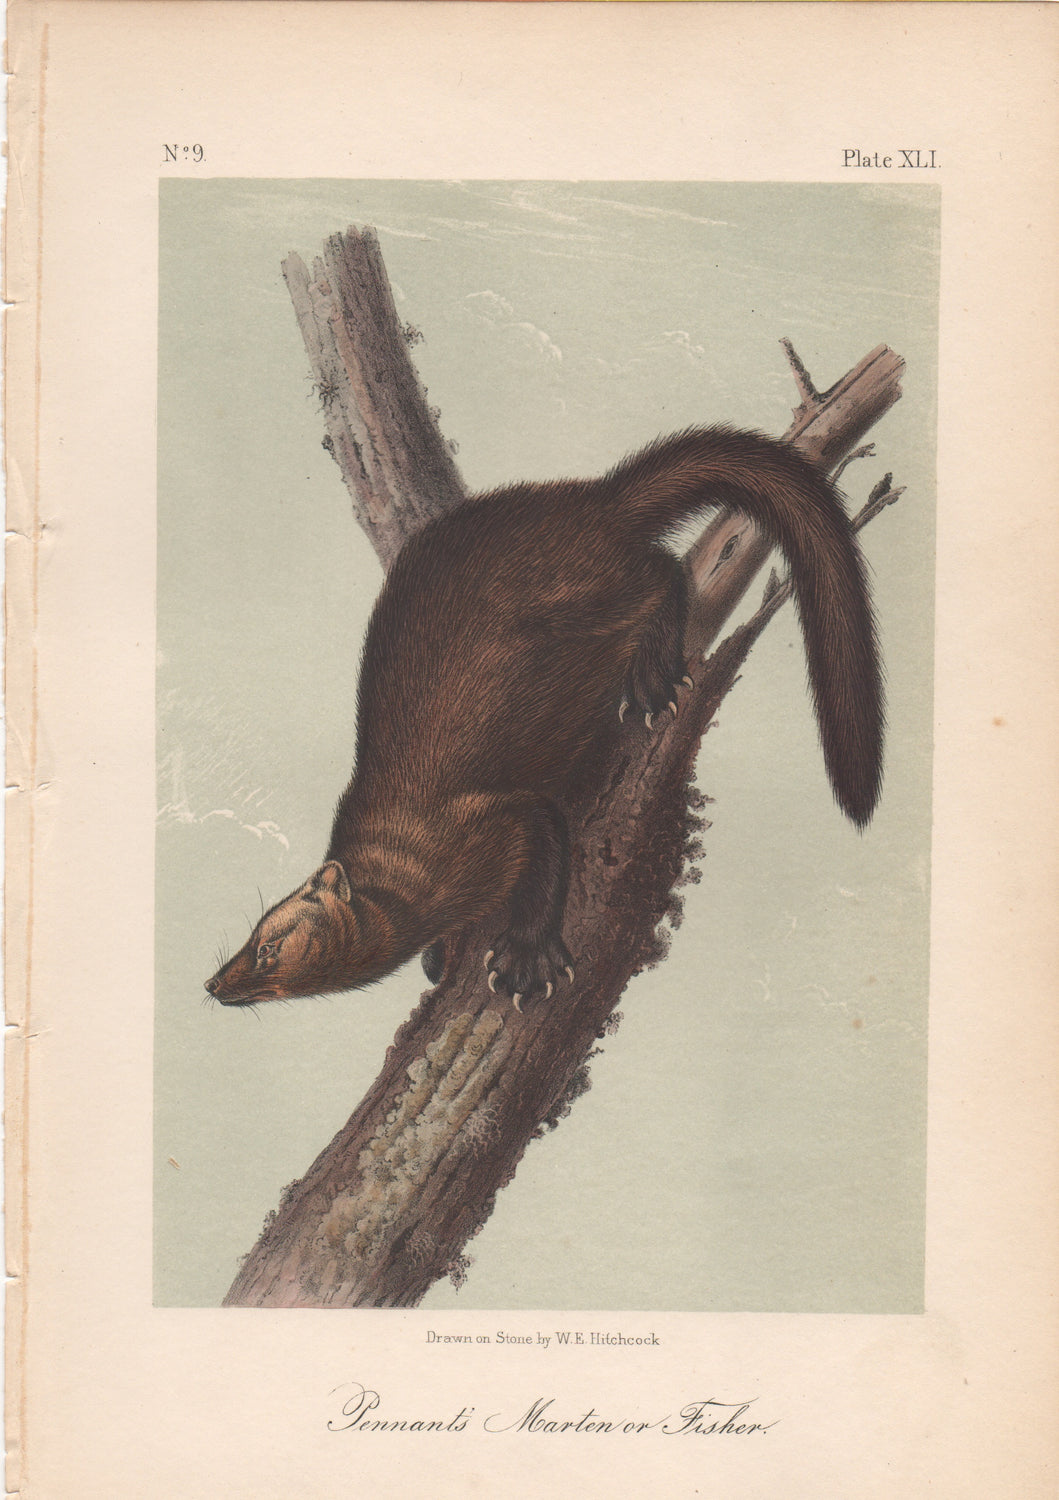 Audubon Original Octavo Mammal, Pennants's Marten or Fisher plate 41